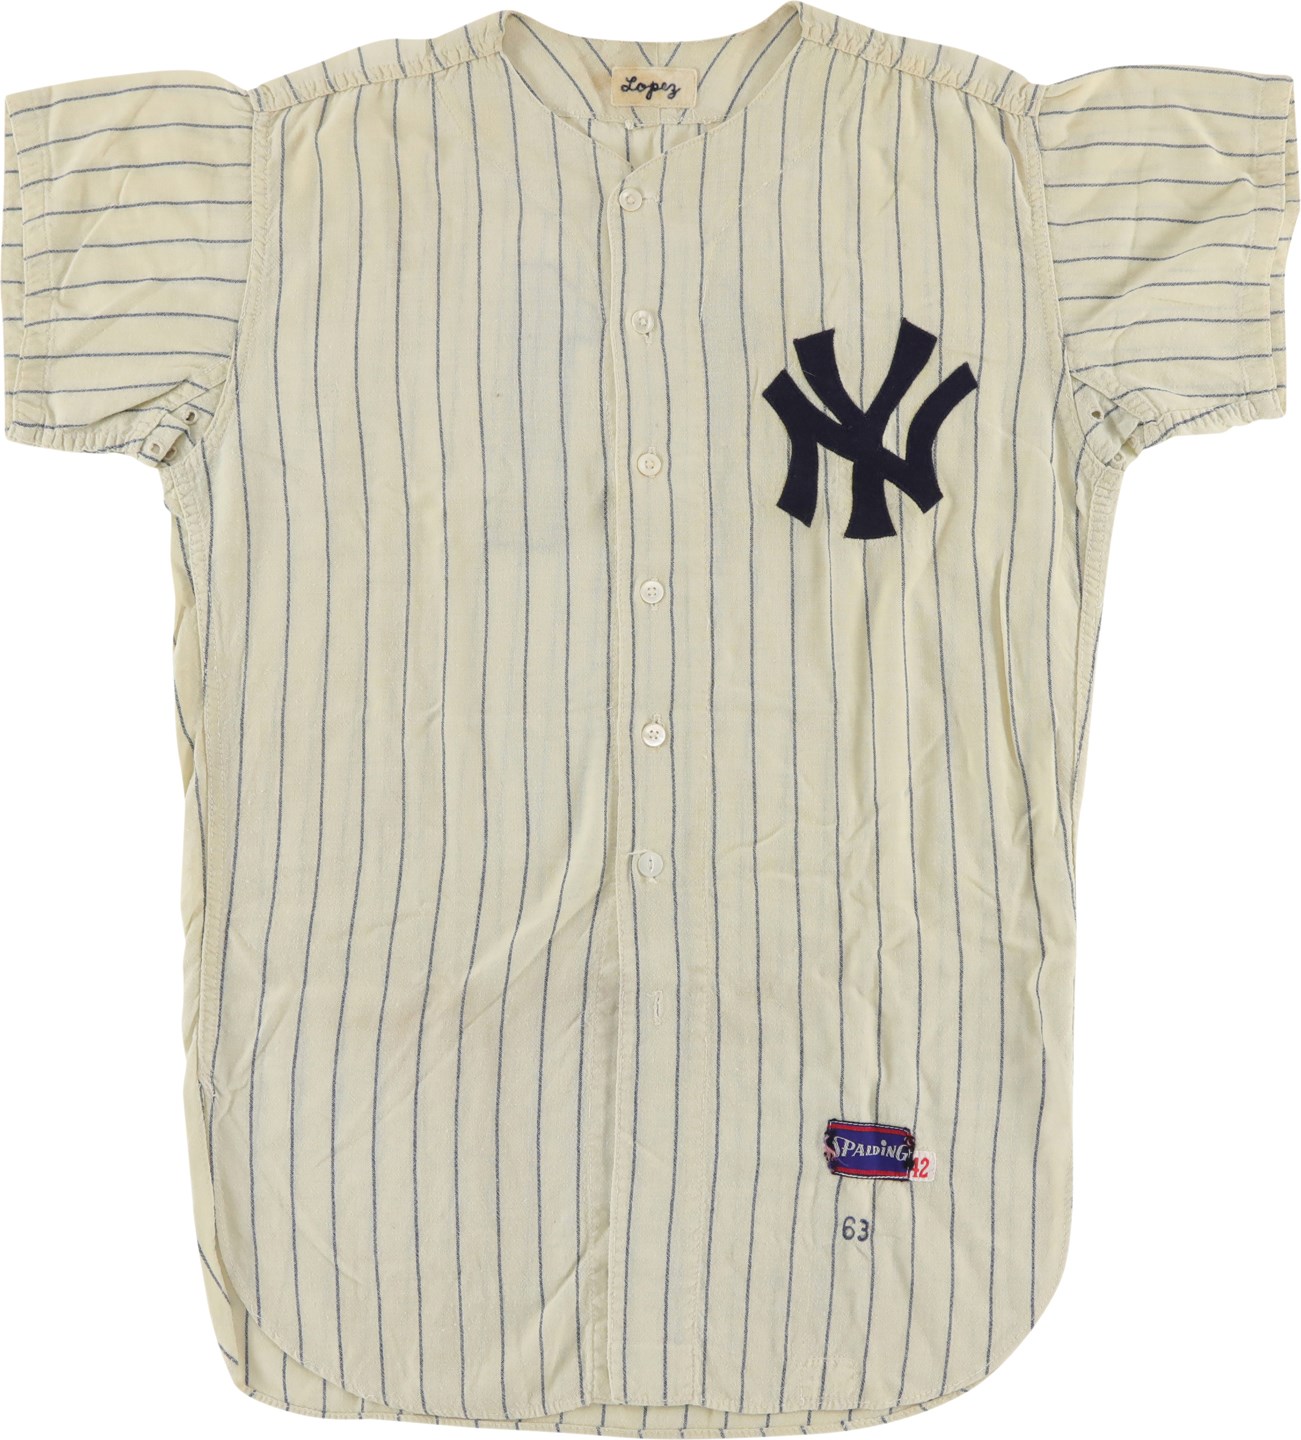 Baseball Equipment - 1963 Hector Lopez New York Yankees Game Worn Jersey